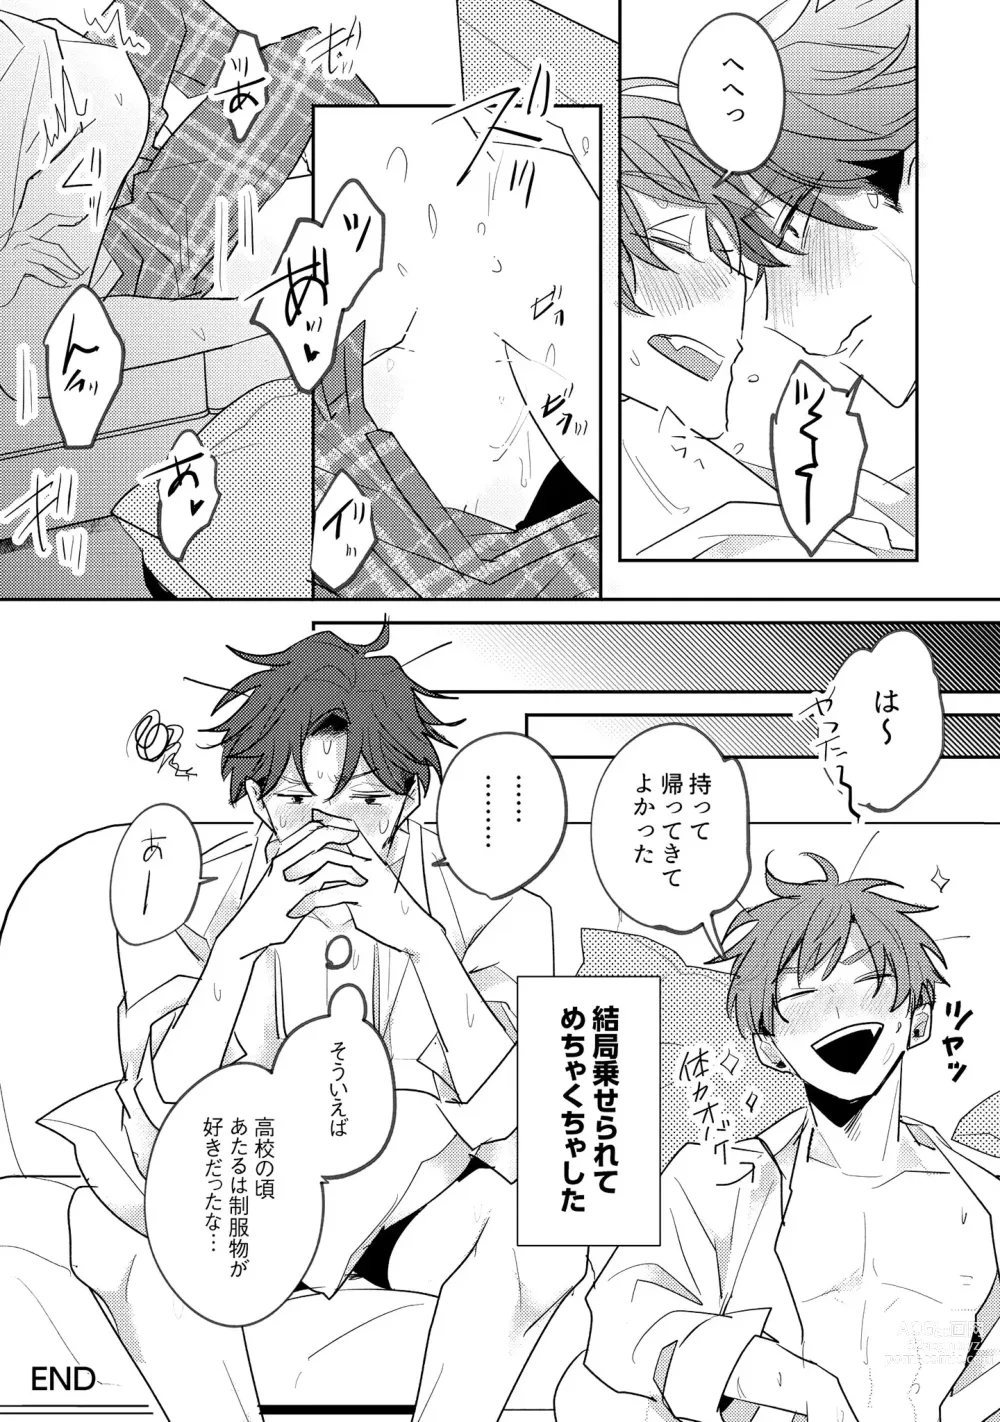 Page 238 of manga No Doubt Lilac